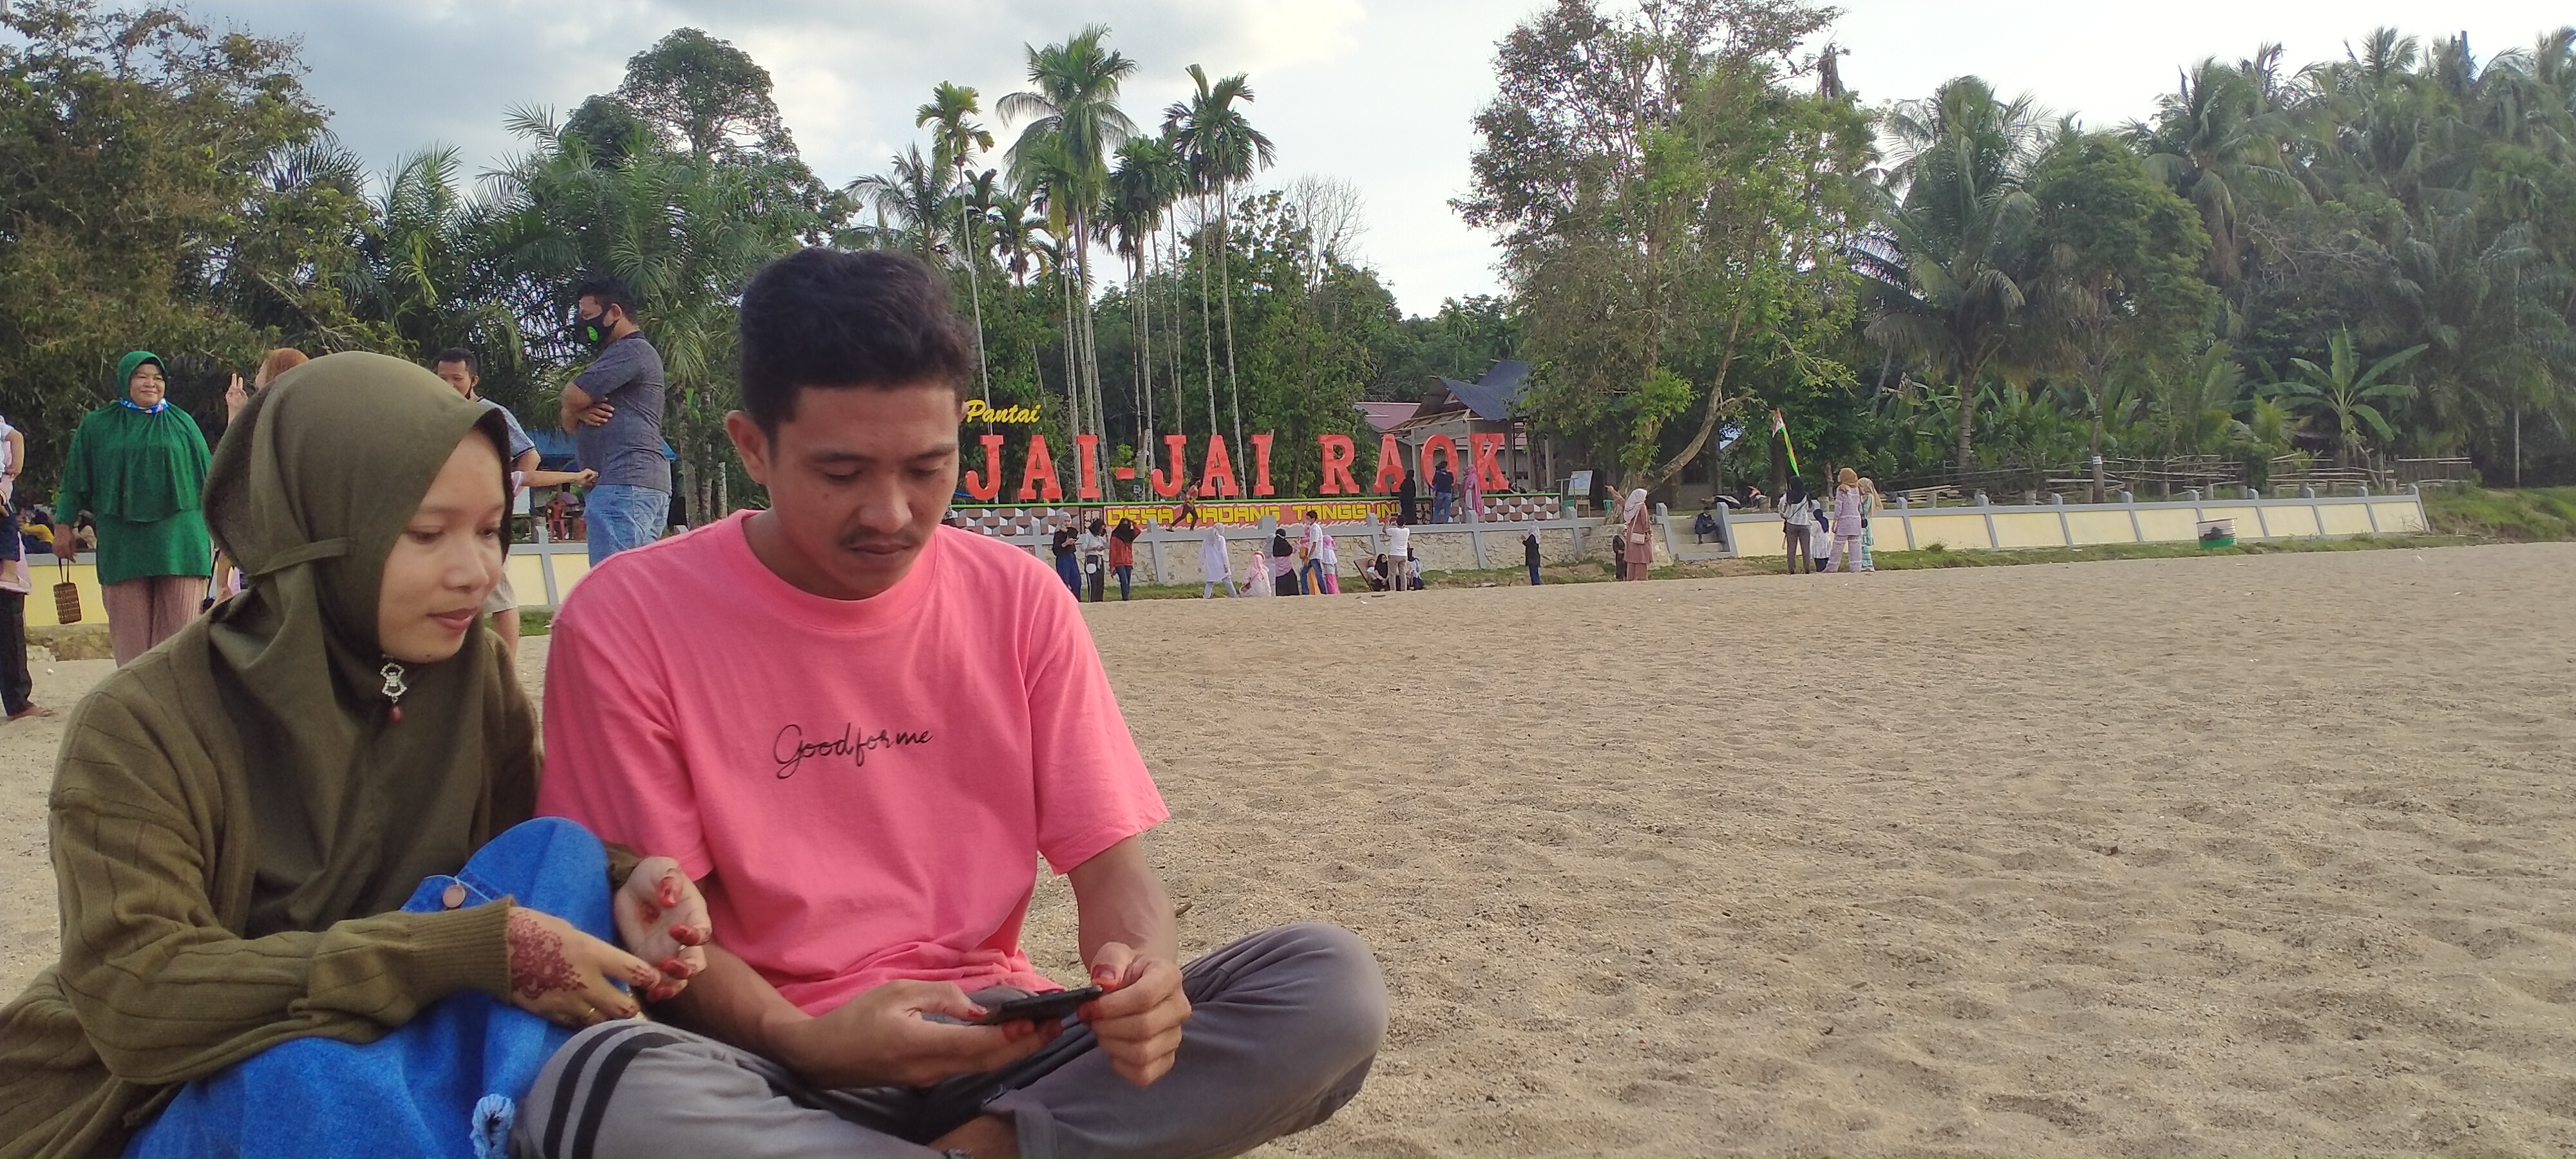 Jai-Jai Raok, Distinasi Wisata Ala Pantai di Kecamatan Pangean Kuantan Singingi